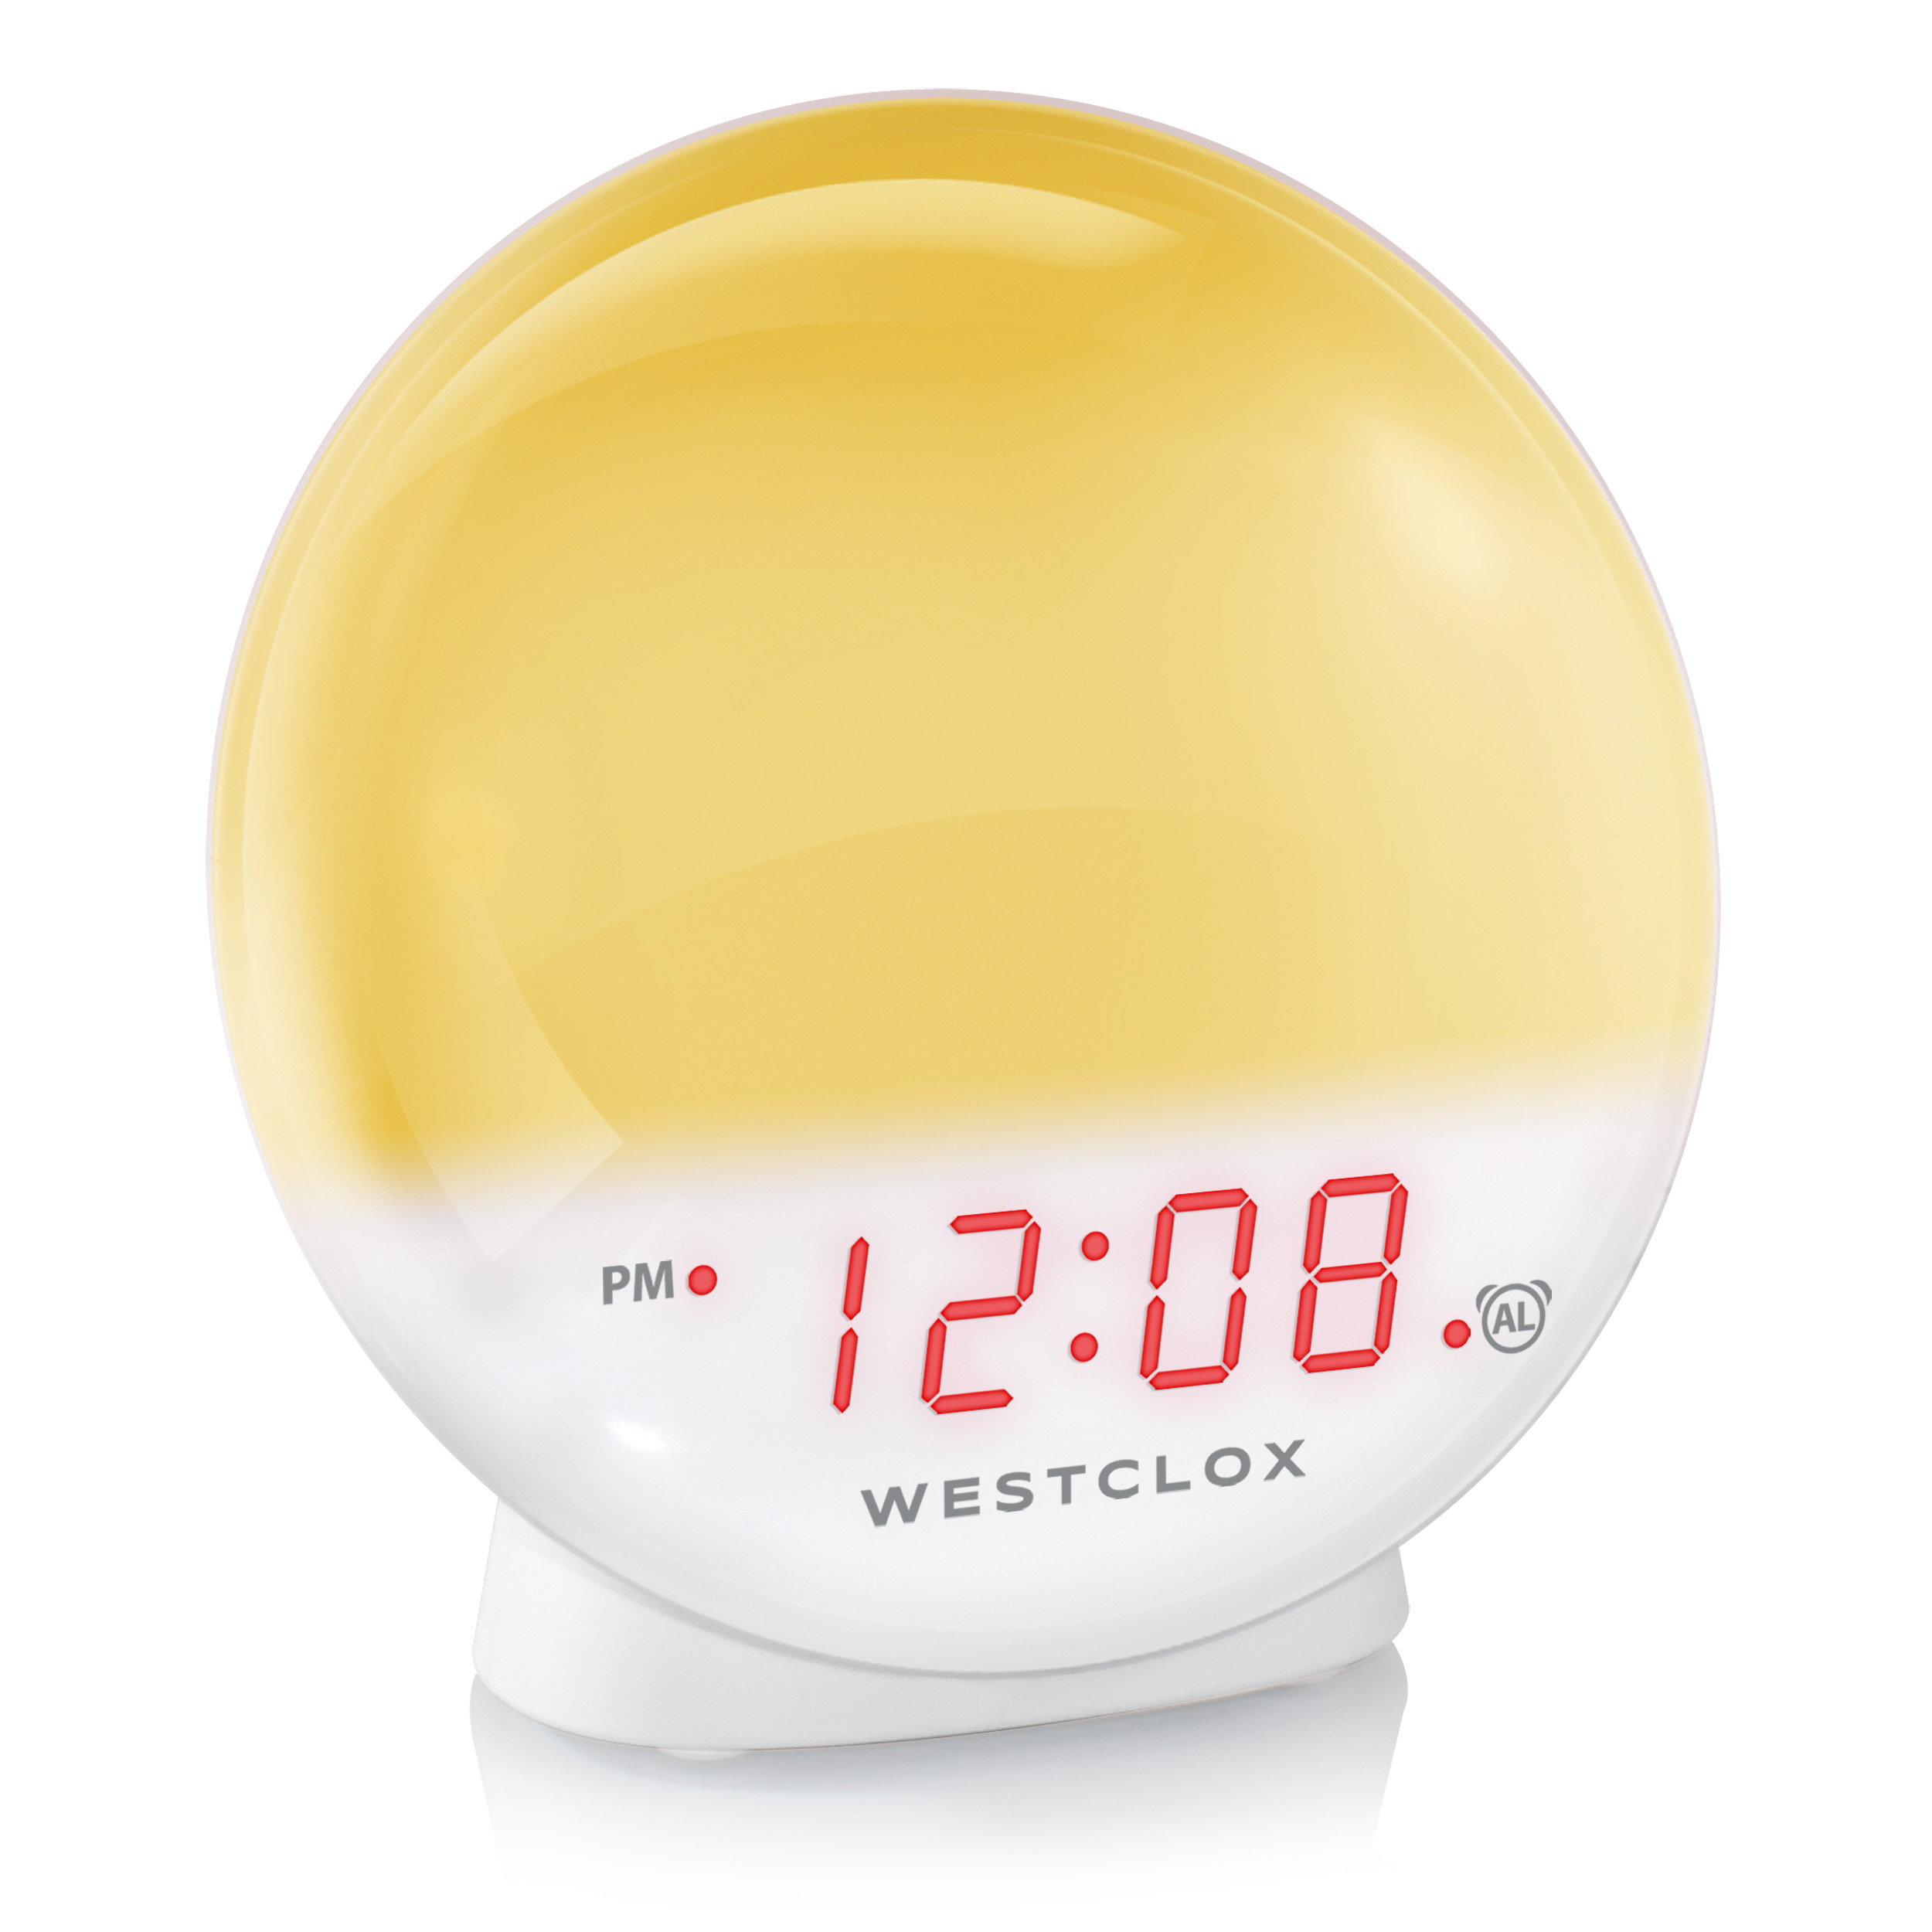 Westclox Sunrise/Sunset Simulating Alarm Clock w/ Dimmable Nightlight $8.70 + Free Shipping w/ Walmart+ or Free Store Pickup